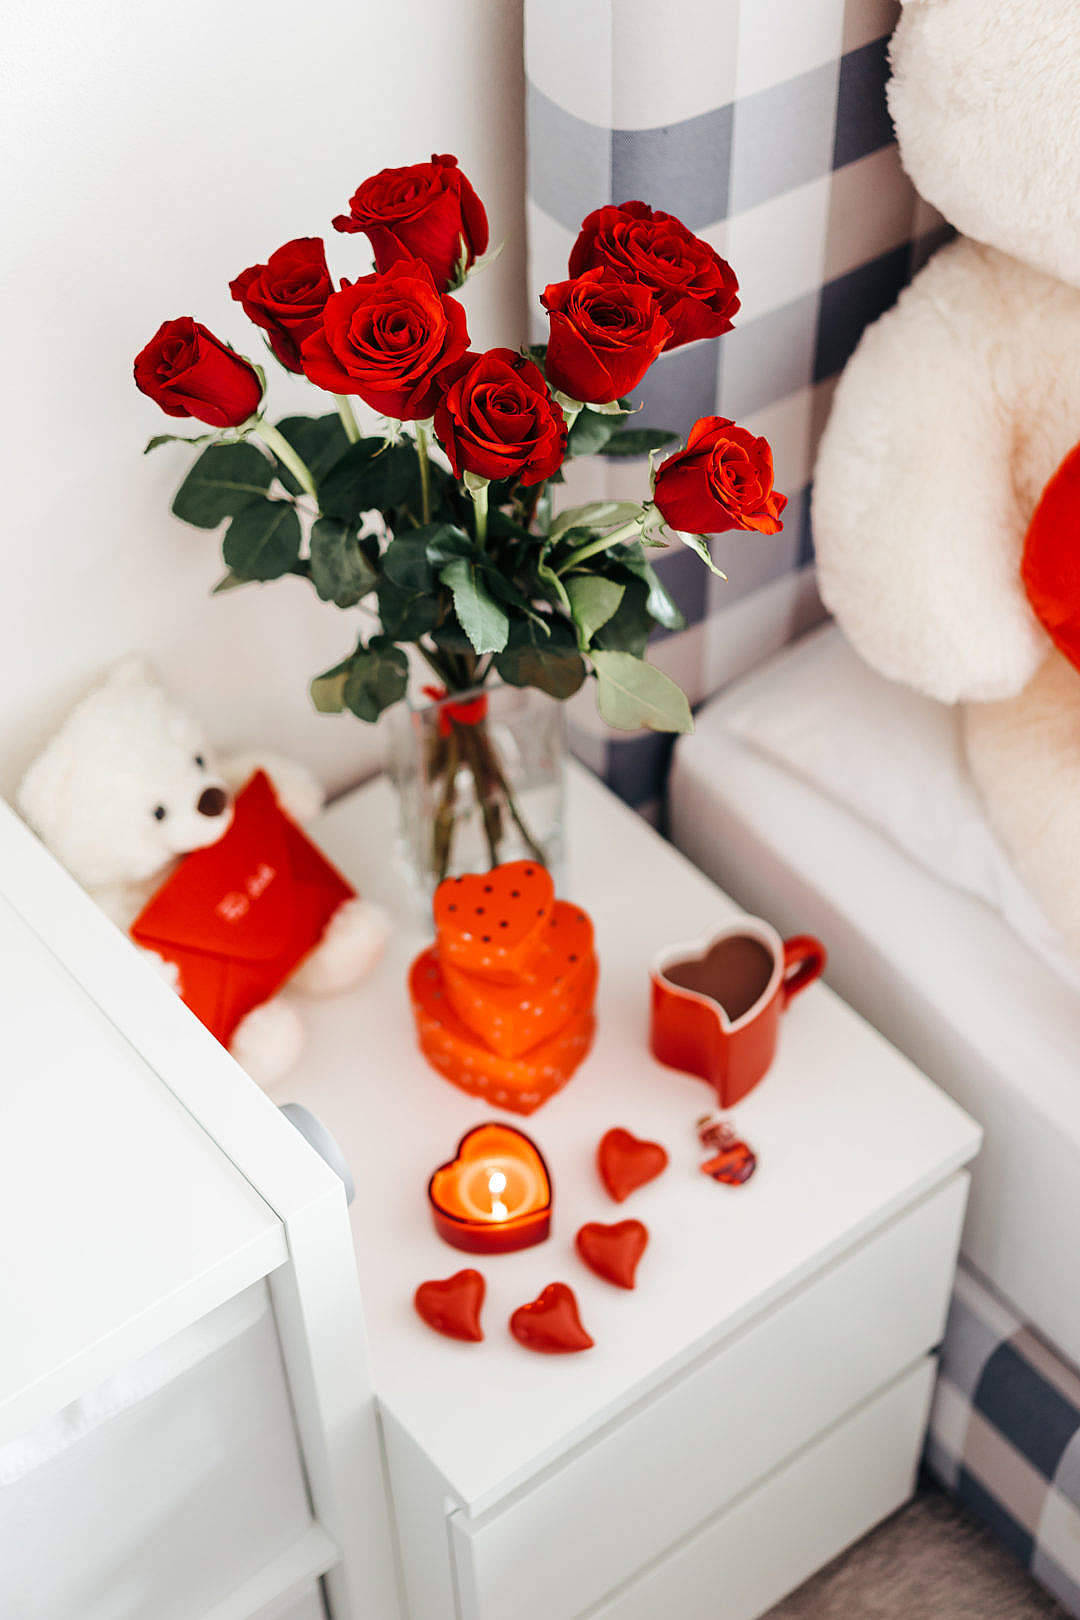 Romantic Love Flowers Roses On Nightstand